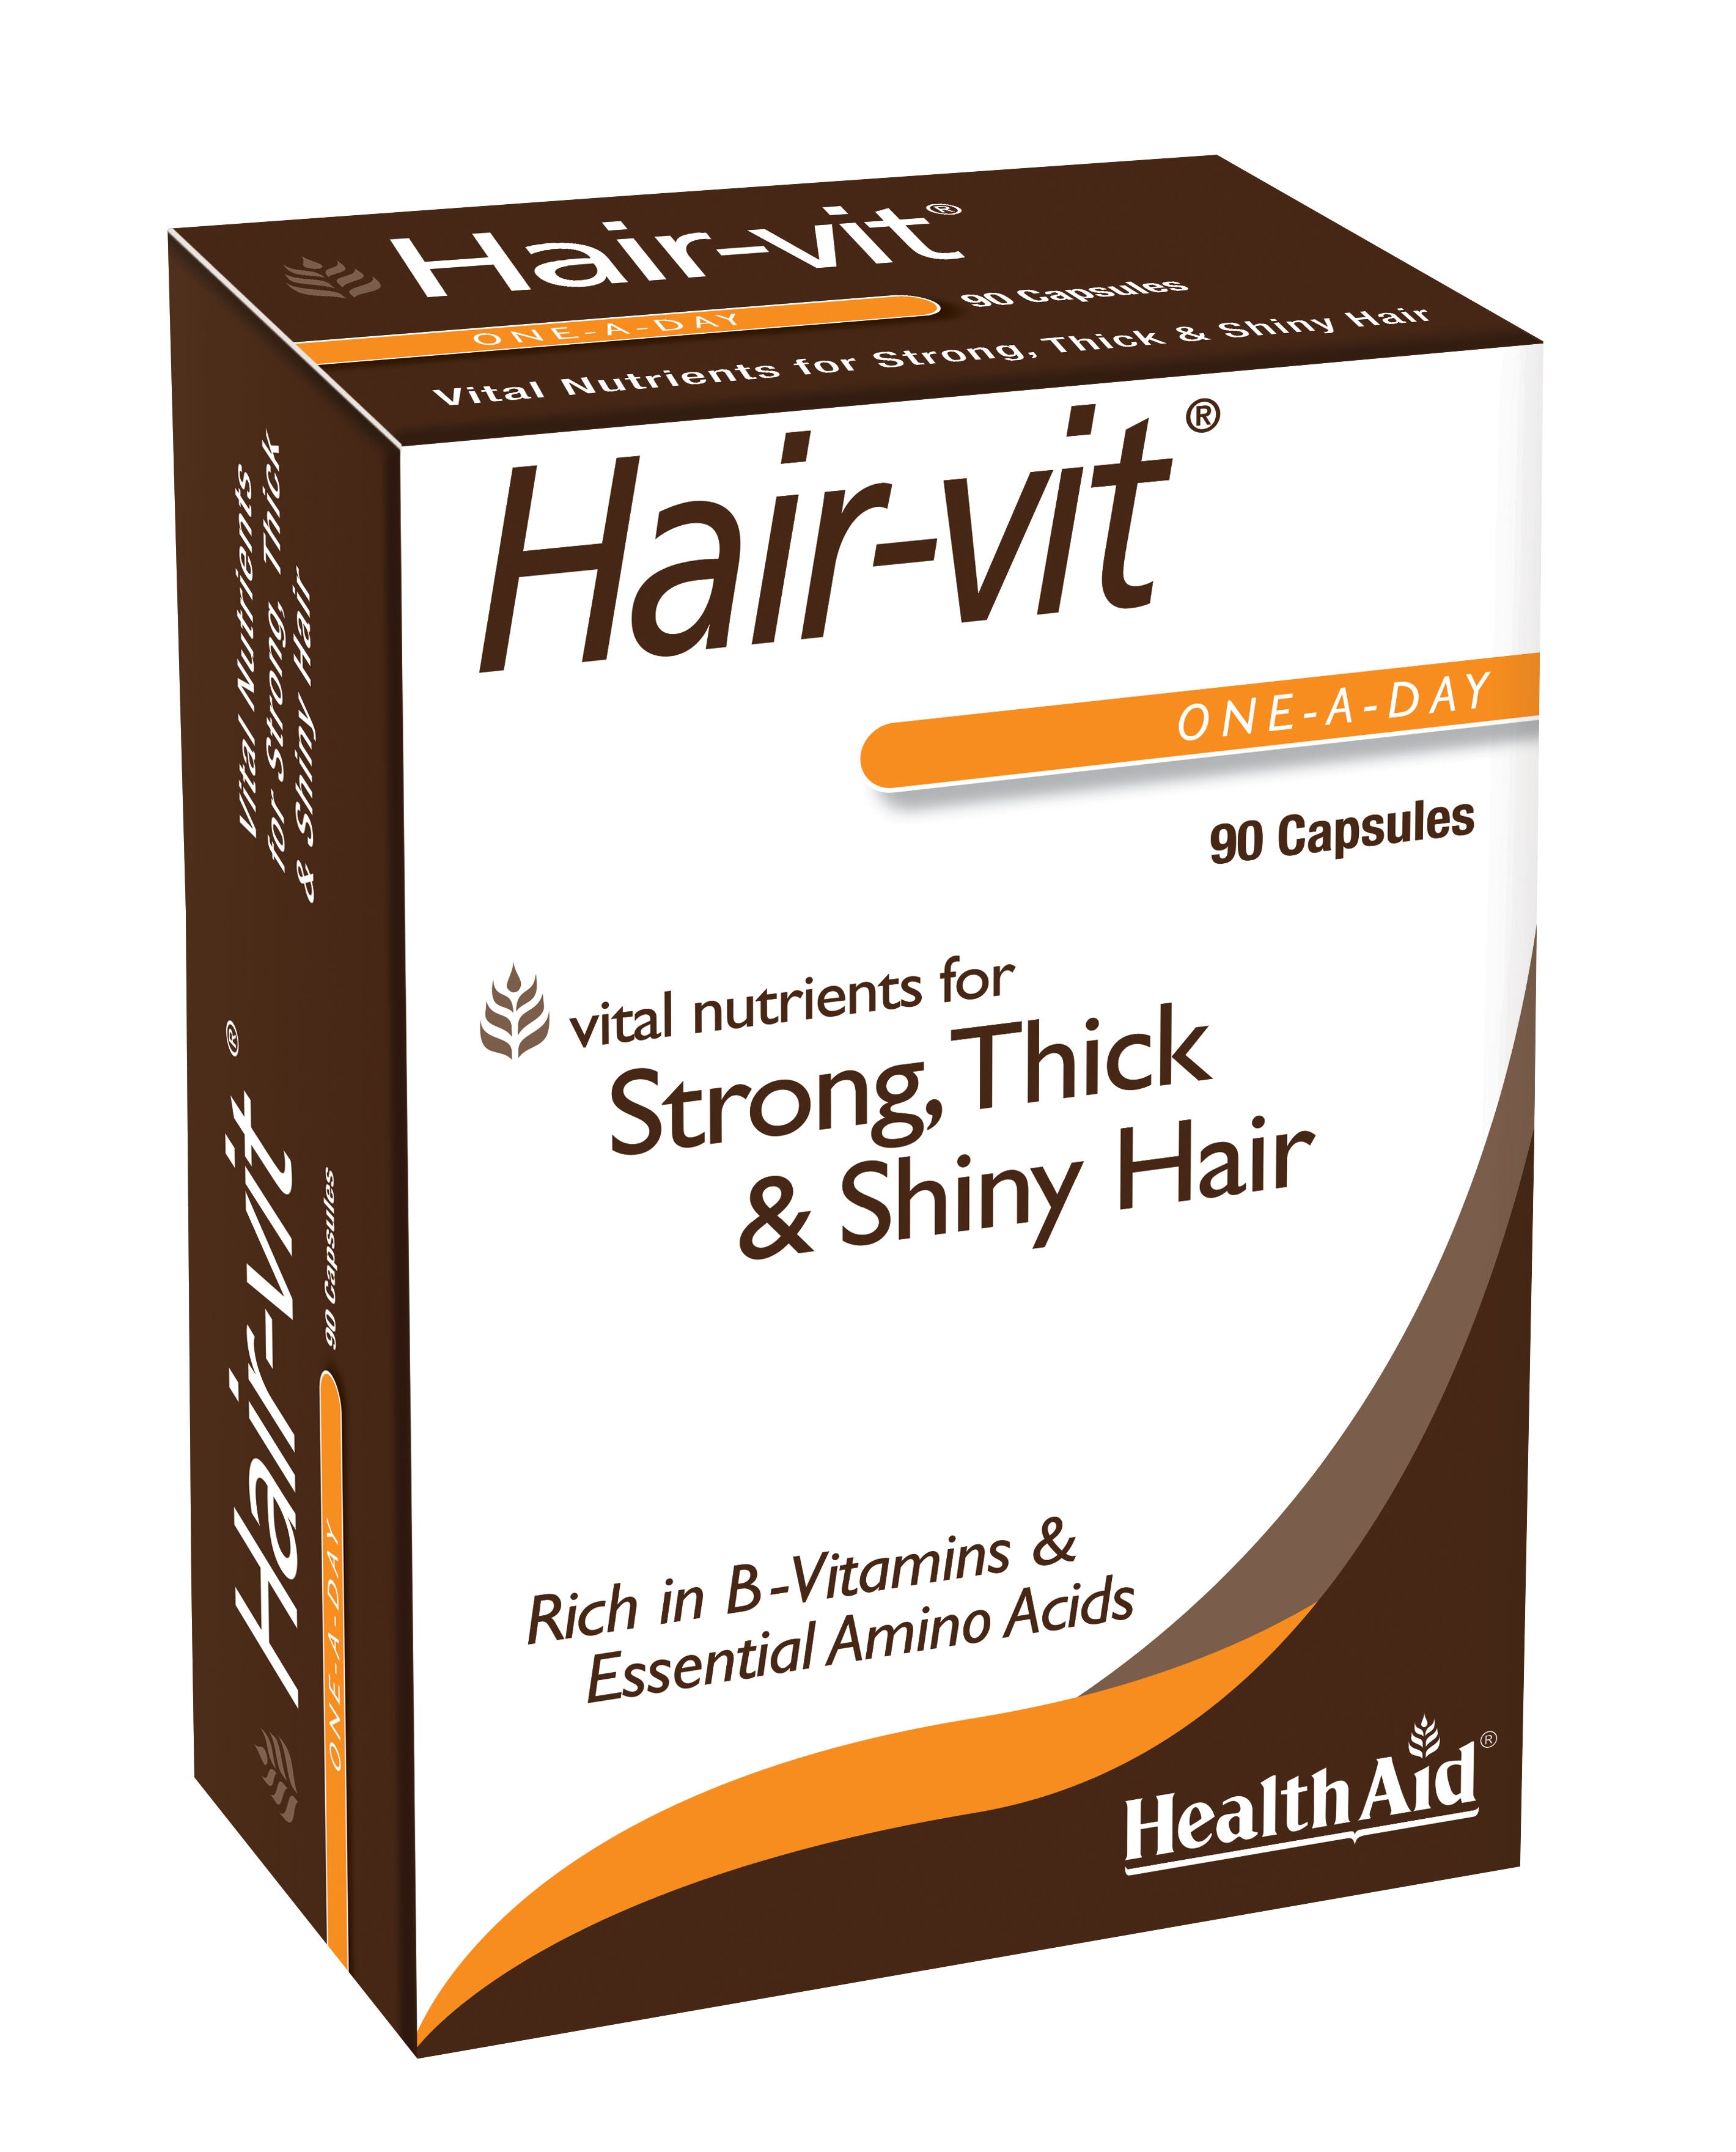 Health Aid Hair-vit